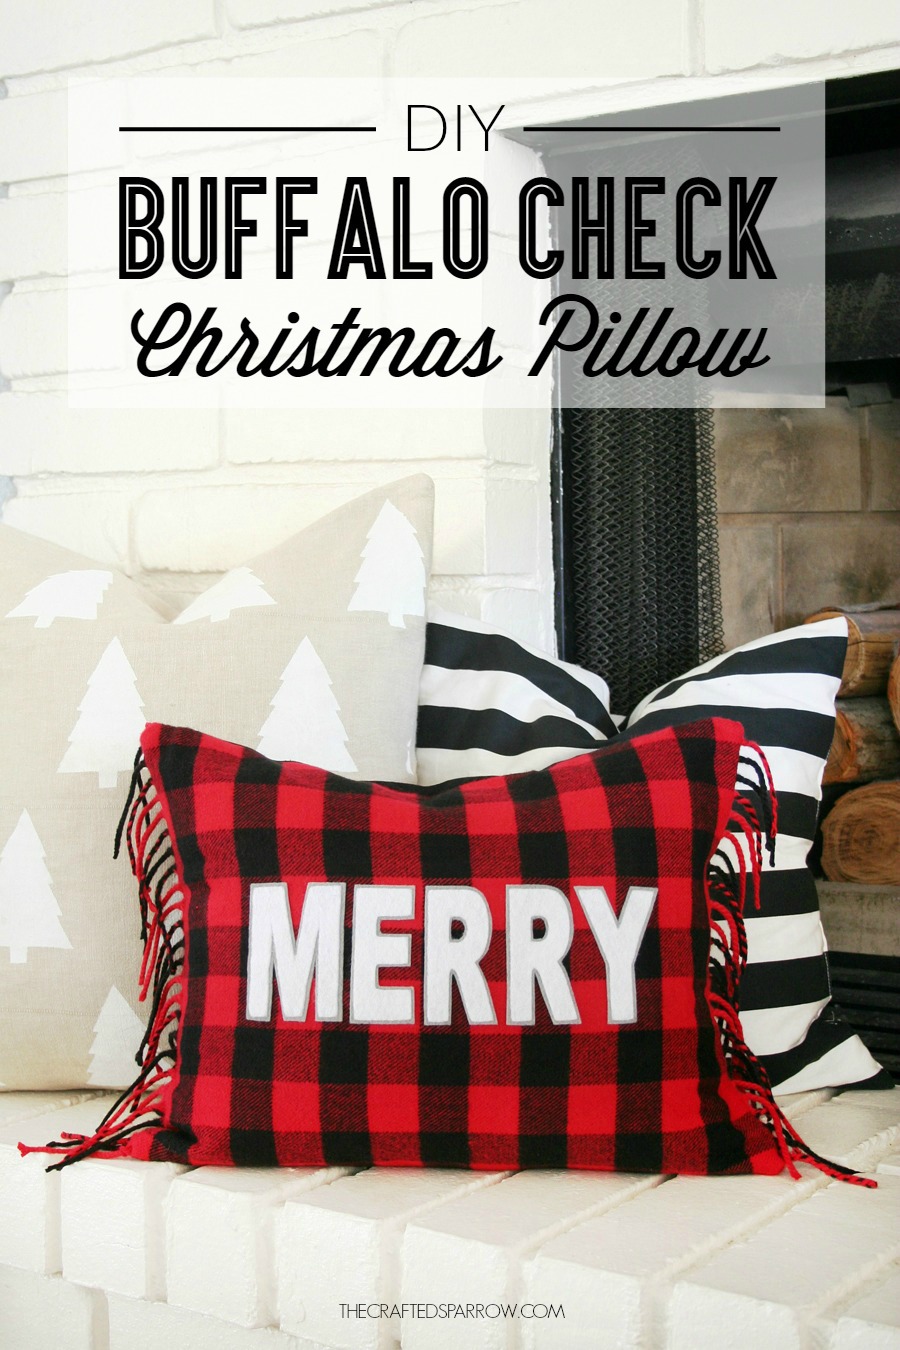 https://www.thecraftedsparrow.com/wp-content/uploads/2015/11/Buffalo-Check-Christmas-Pillow-1-1.jpg